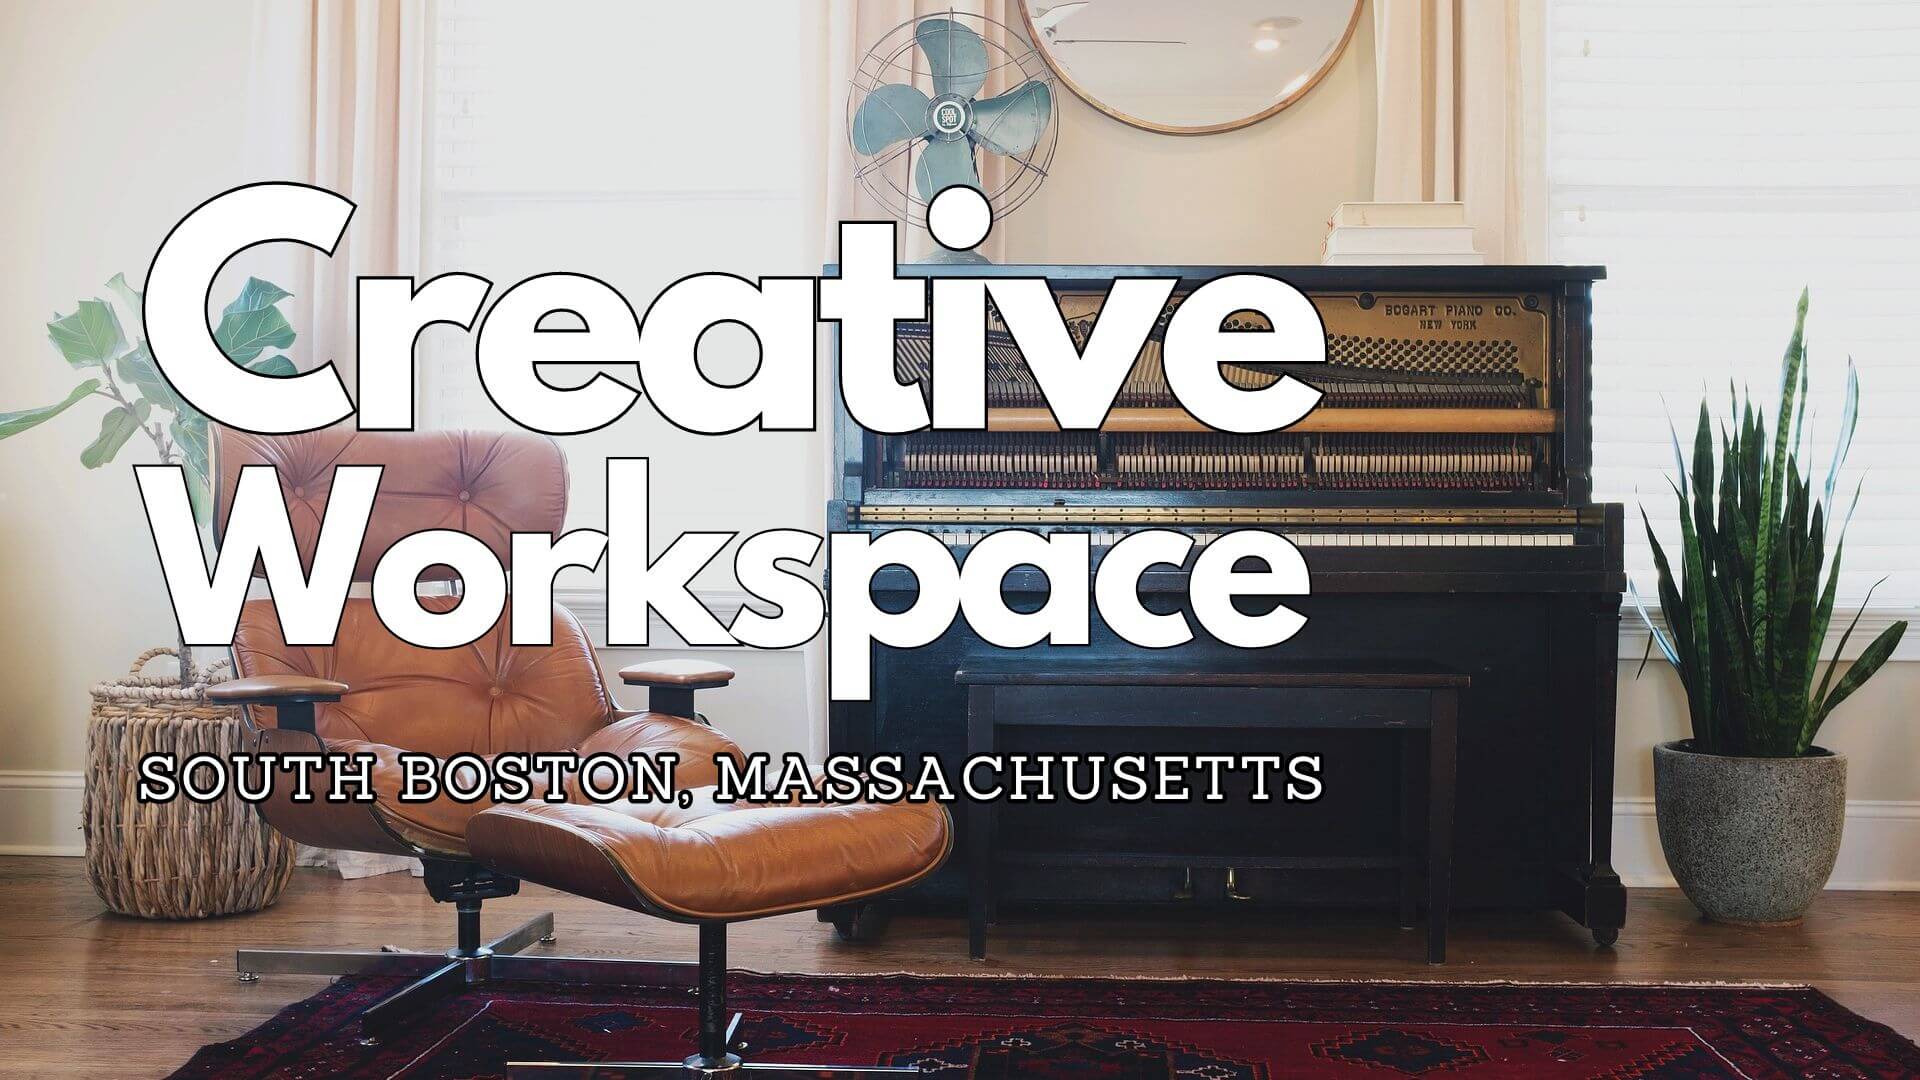 Creative Workspace in South Boston, Massachusetts: Musicians Playground